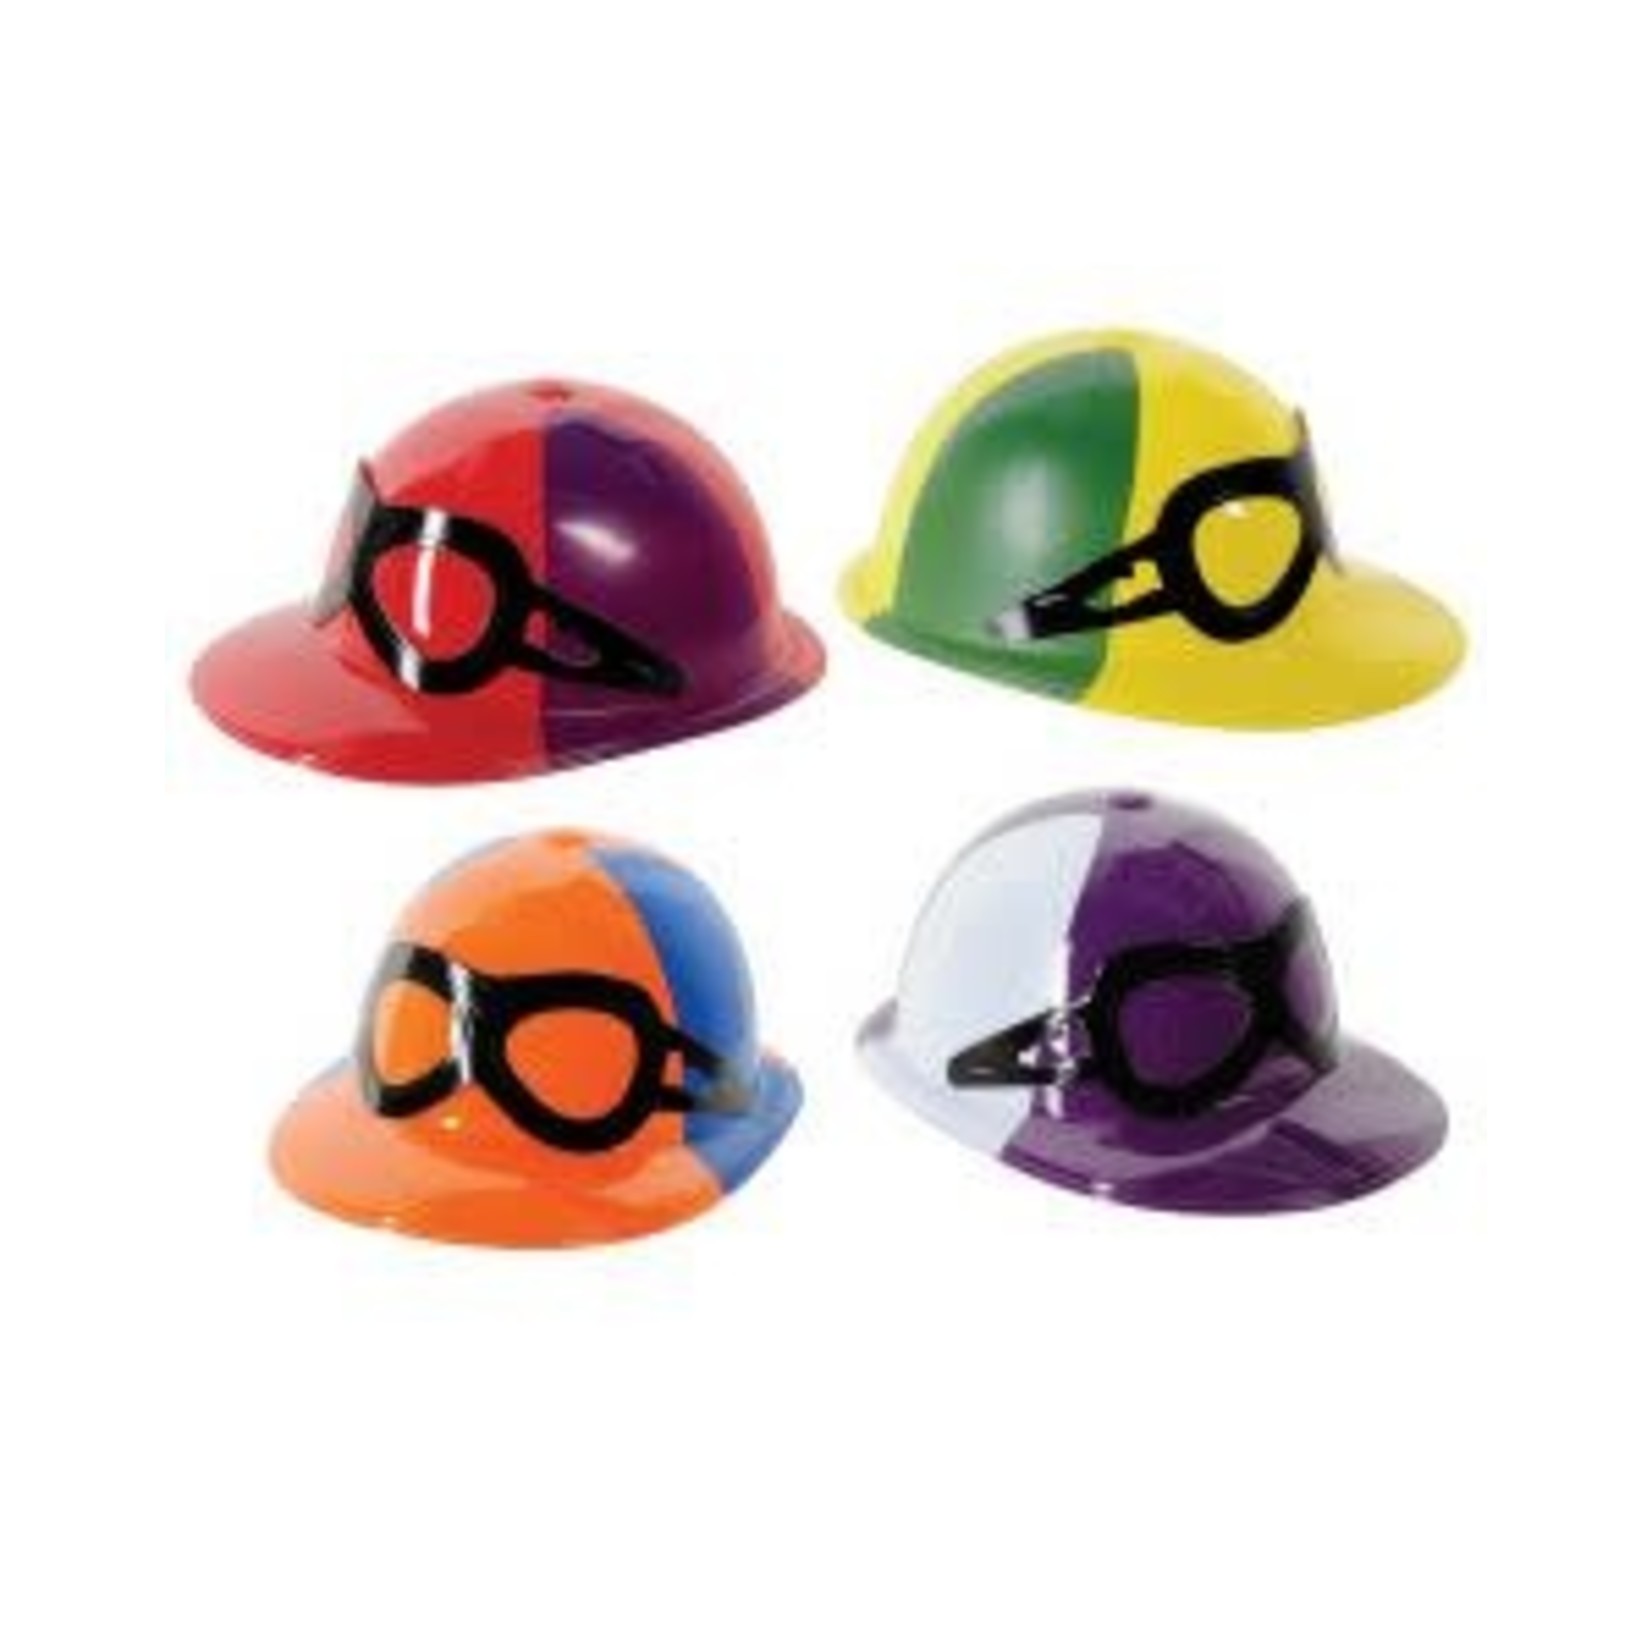 Beistle Plastic Jockey Helmet - 1ct. (Assorted Colors)